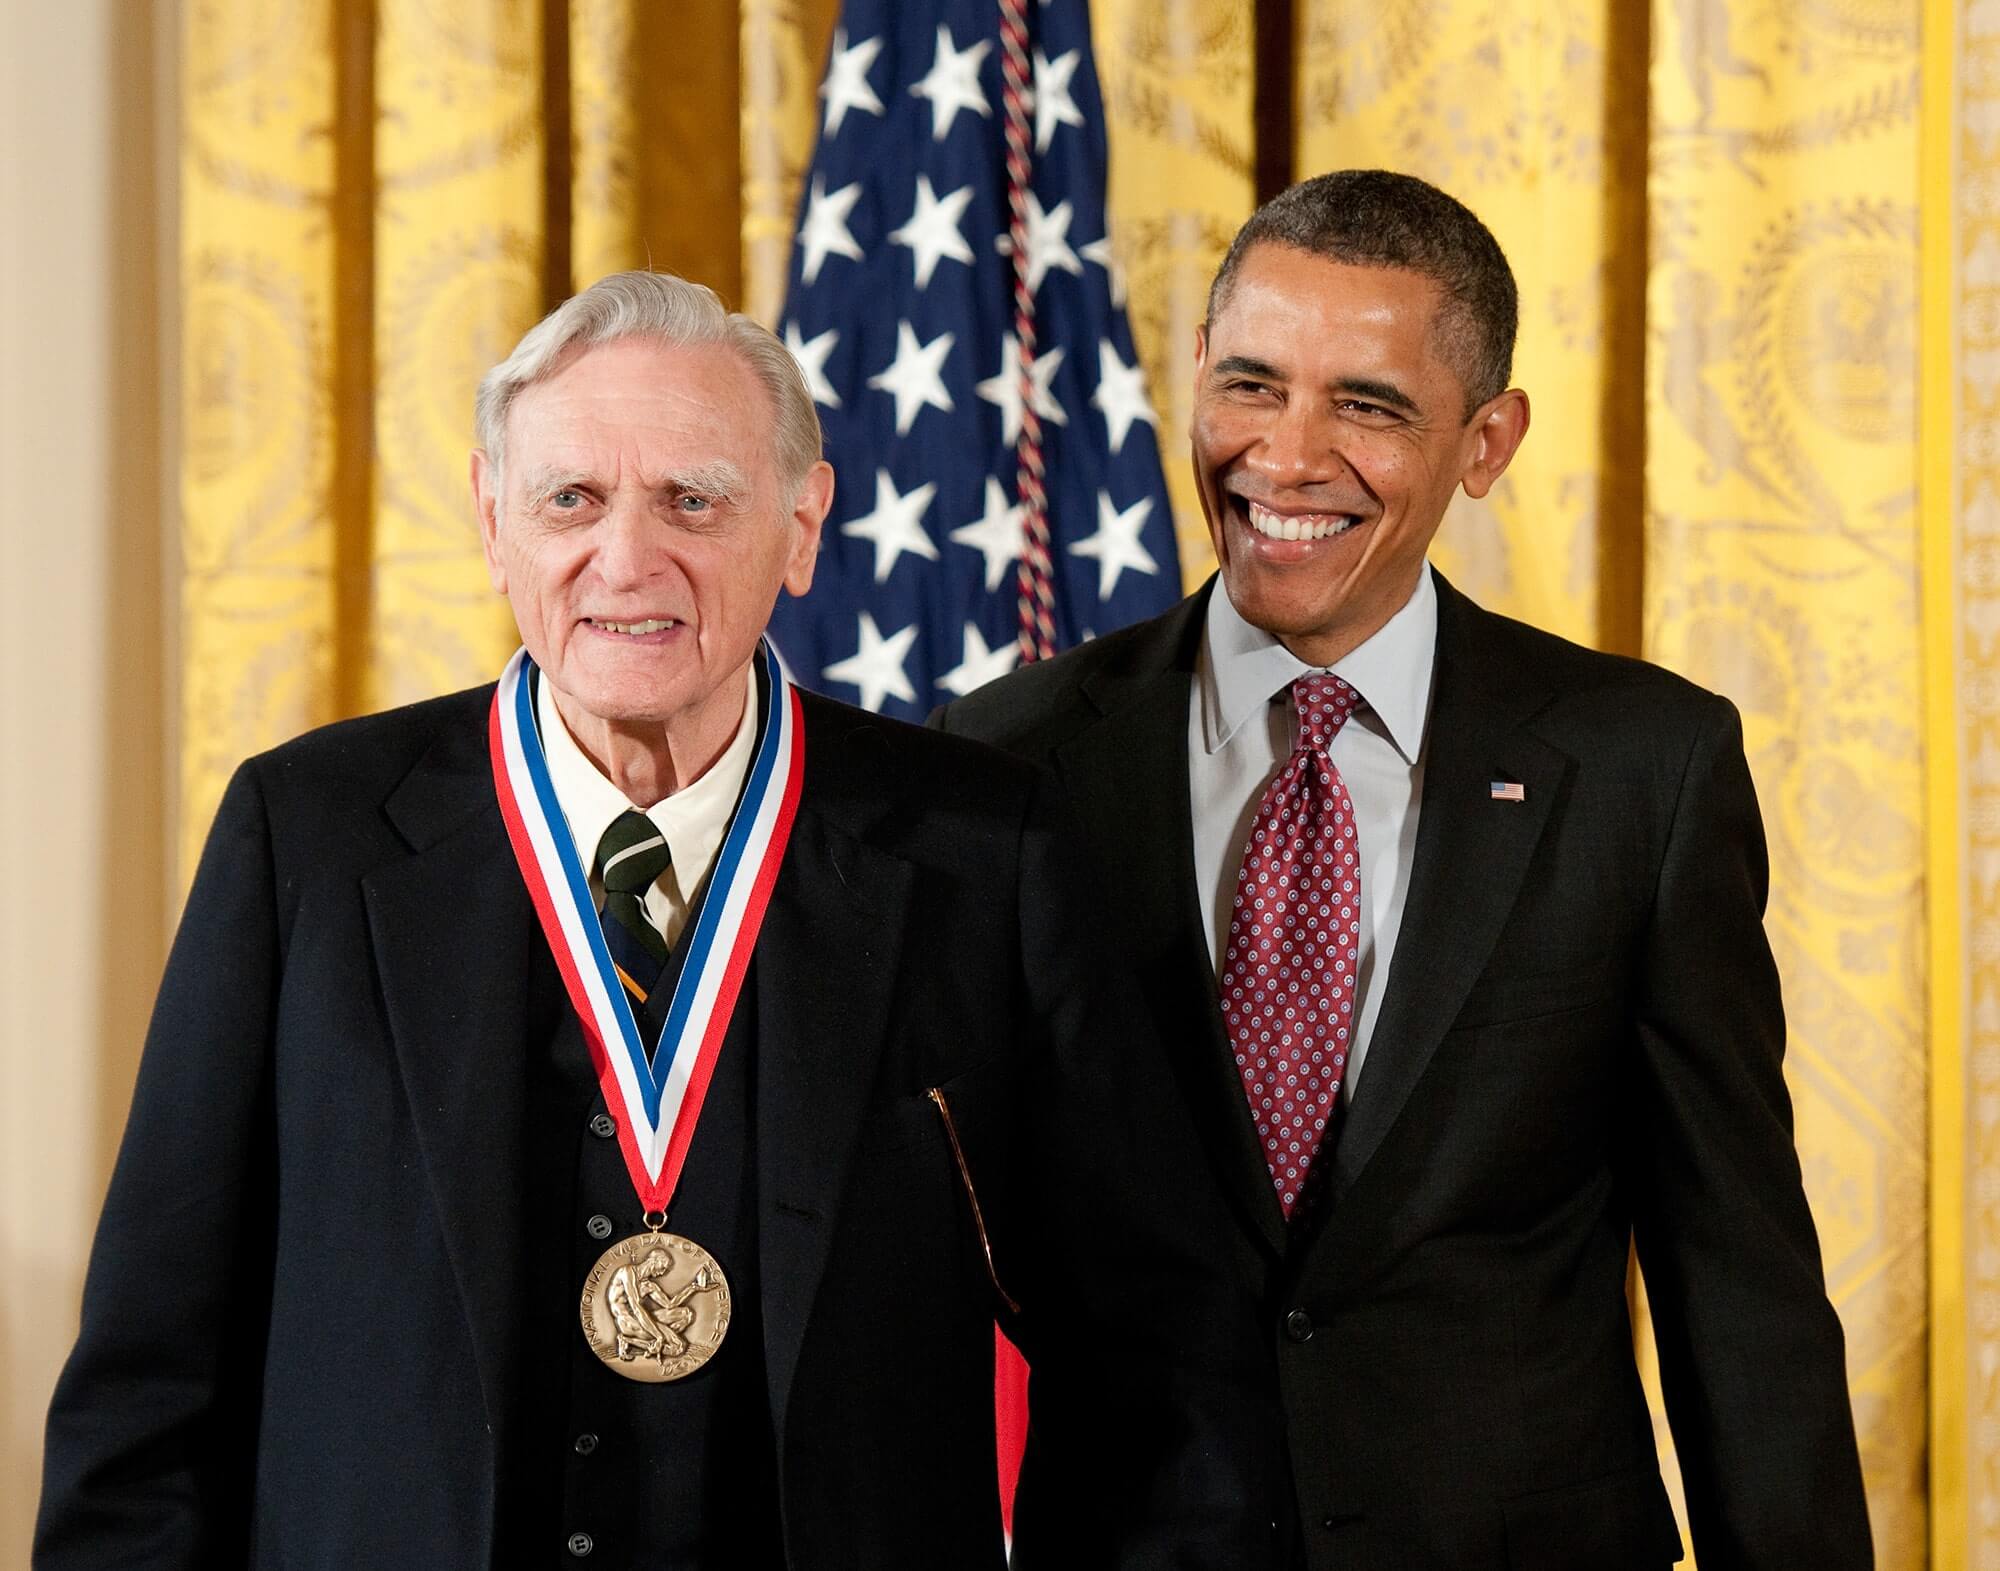 John Goodneough smiling with the National Medal around his neck alongside former President Barack Obama